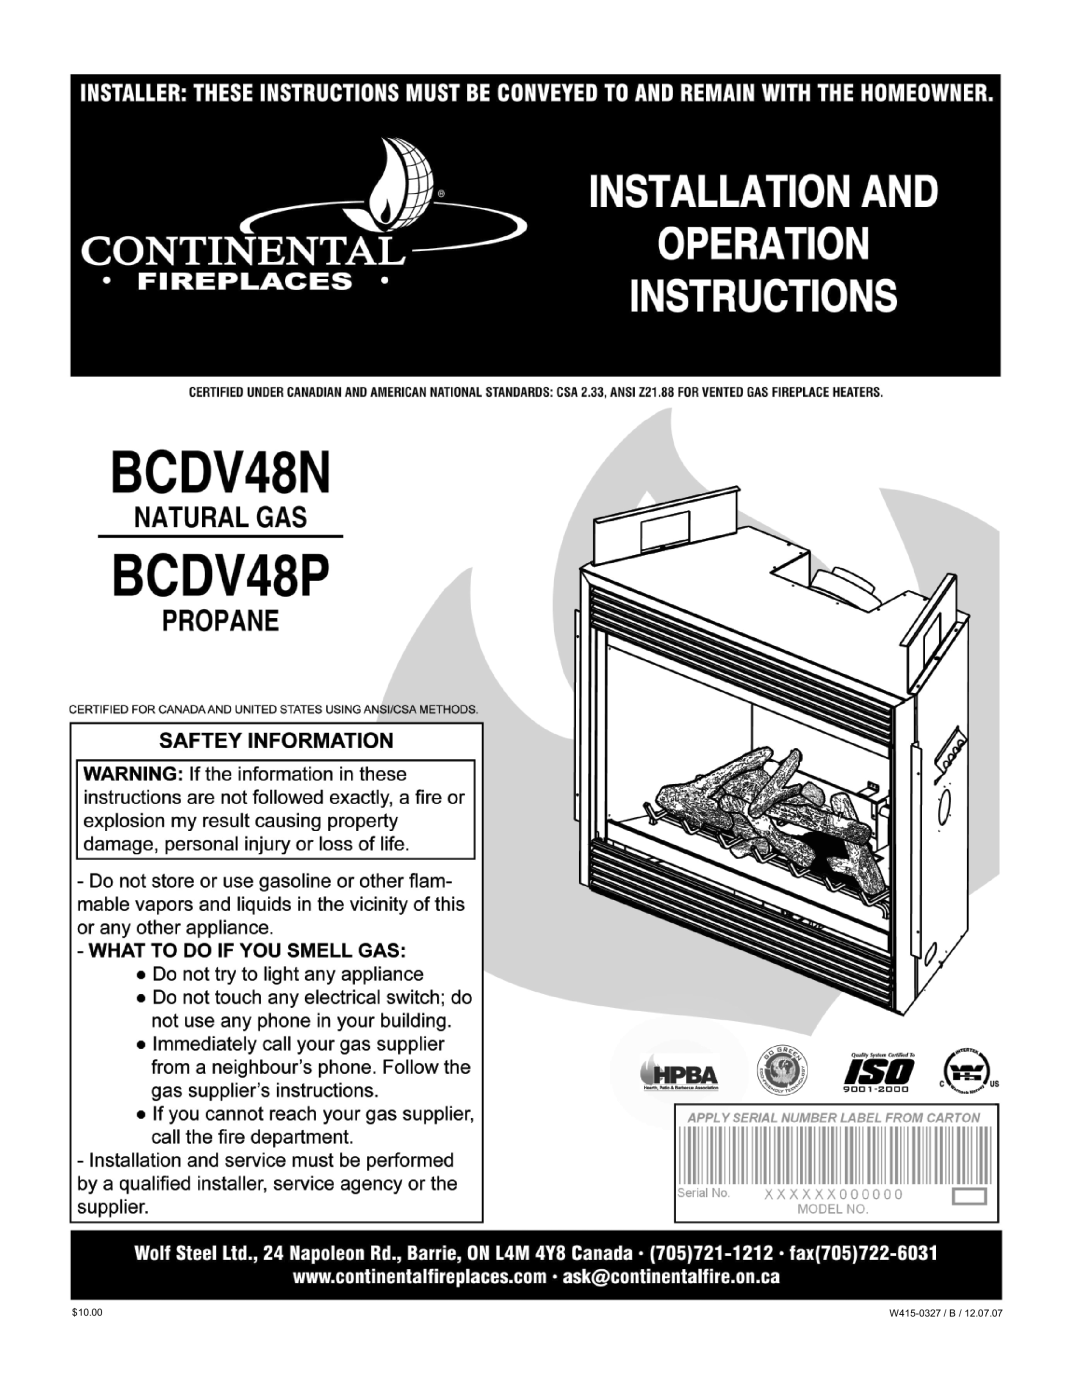 Continental BCDV48N, BCDV48P manual W415-0327 /B, $10.00 